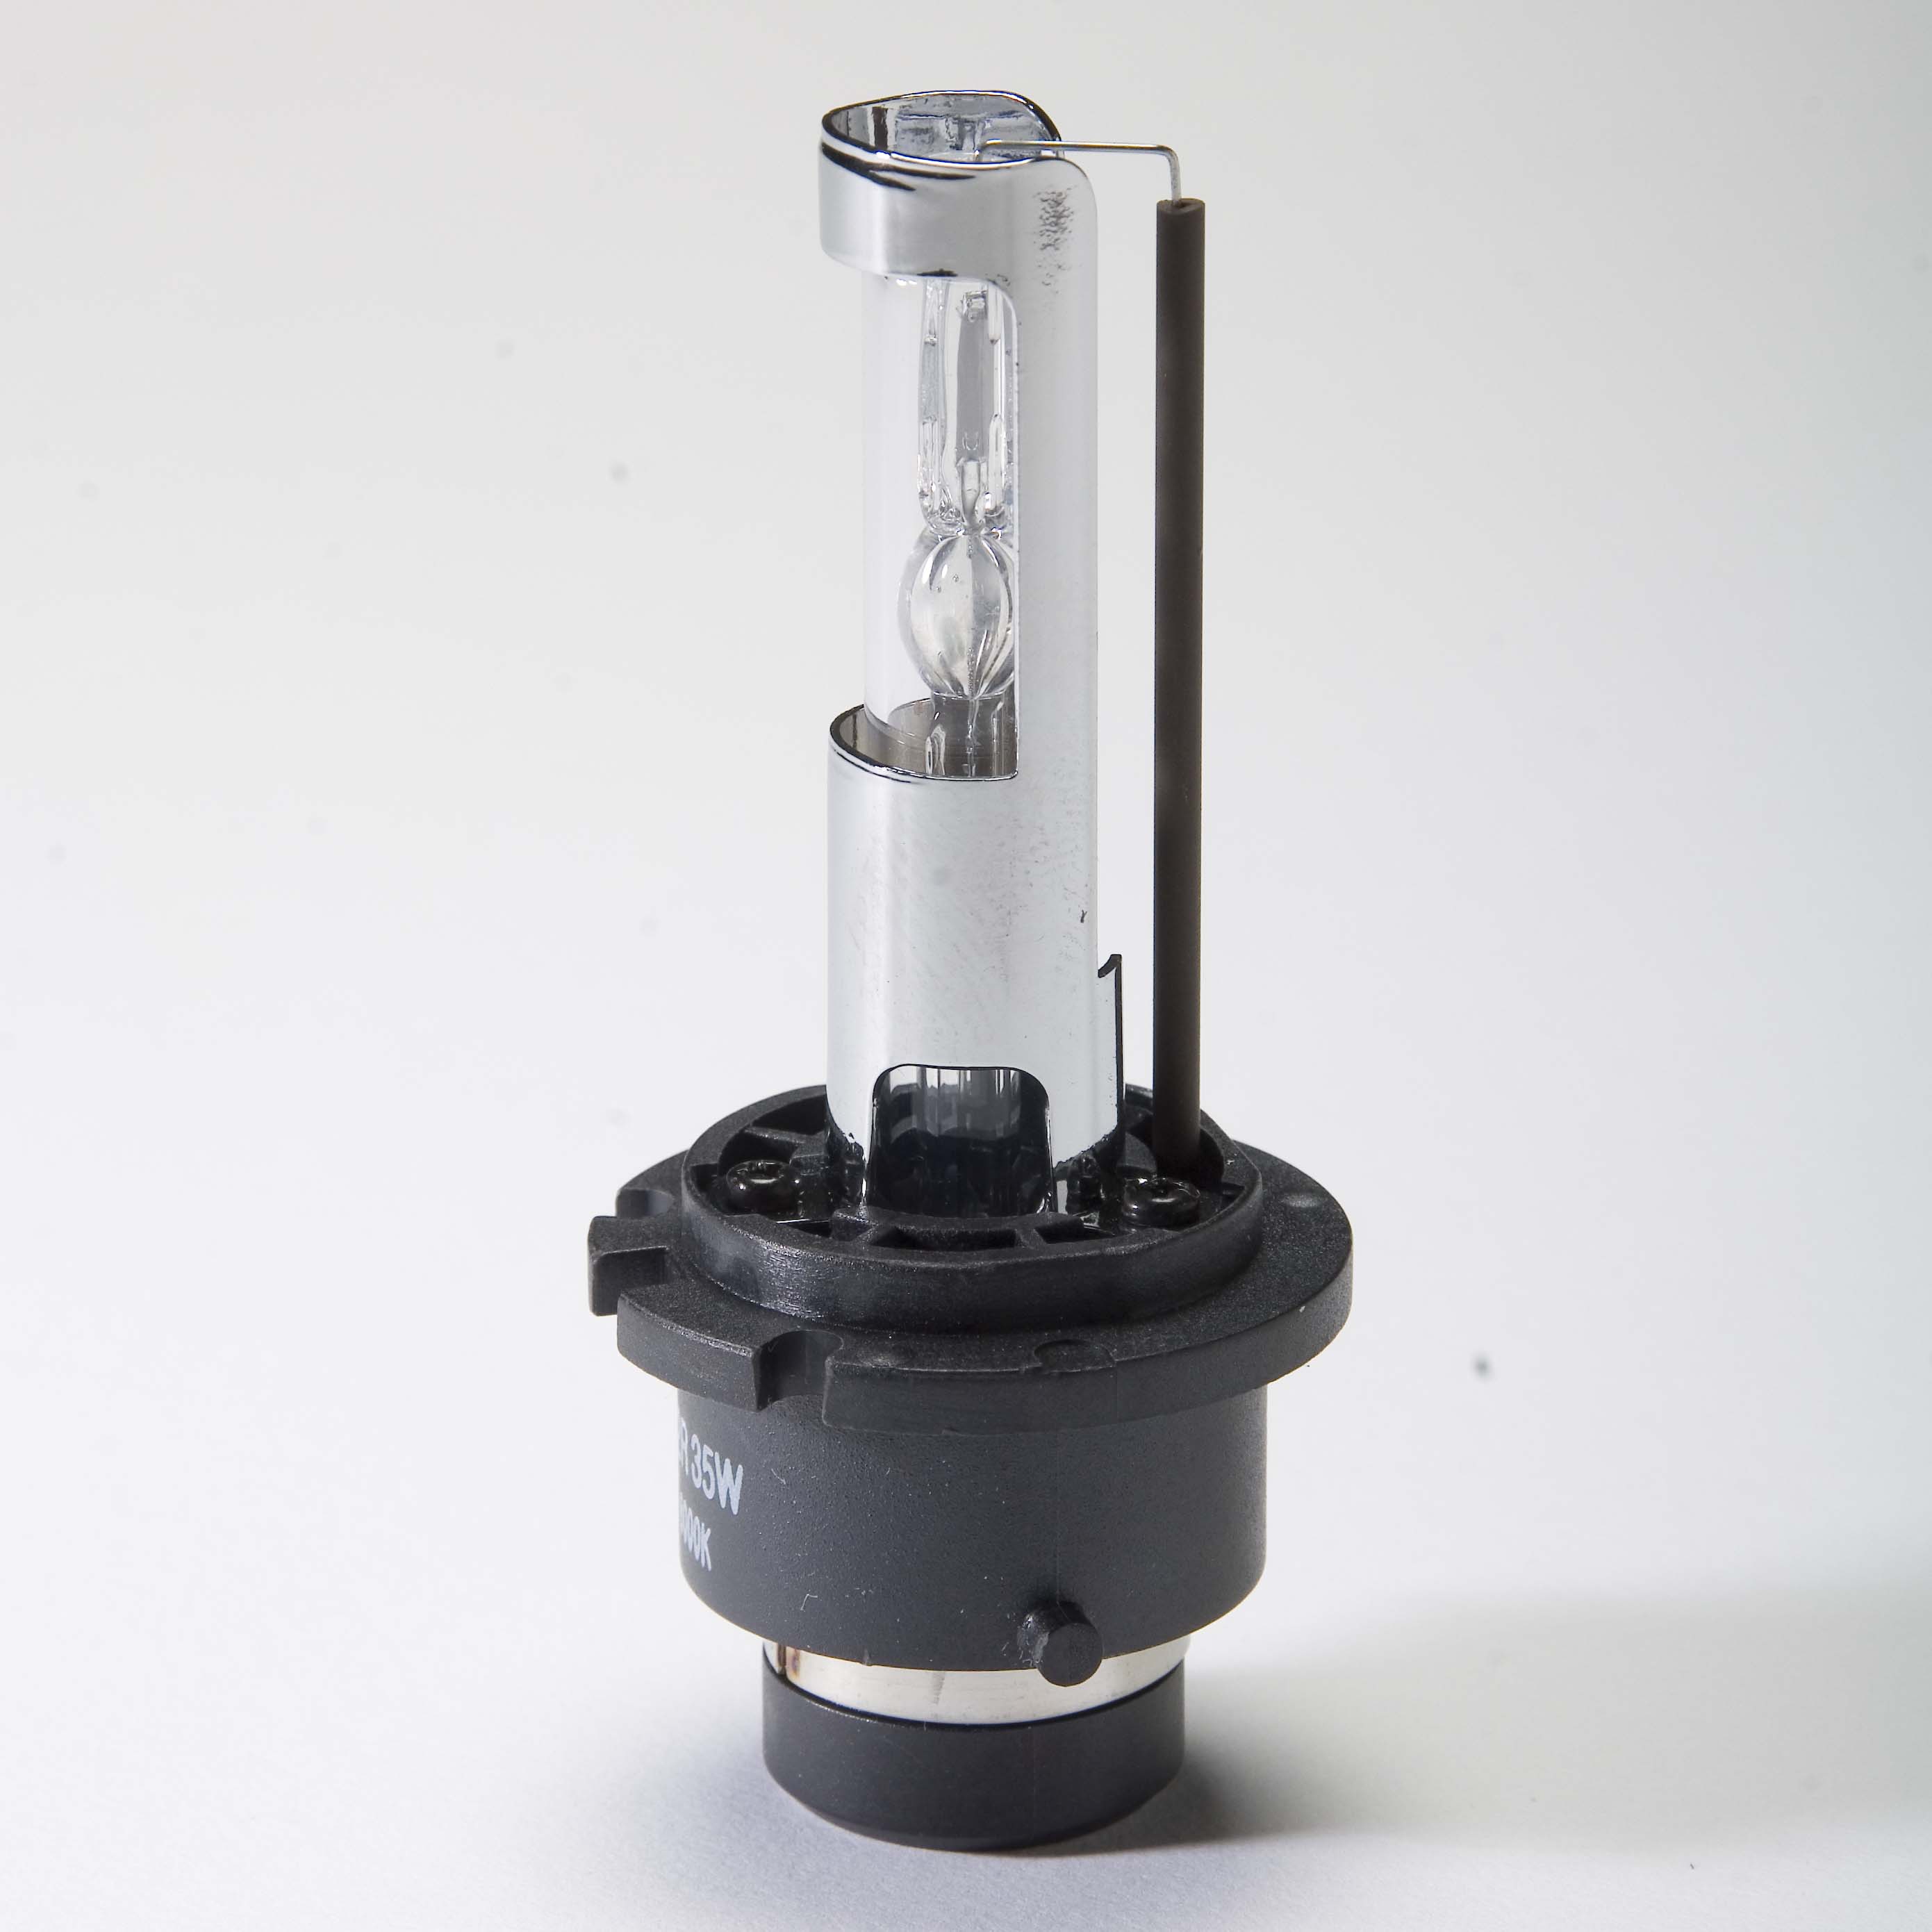 Putco High Intensity Discharge Lighting Replacement Light Bulbs HID